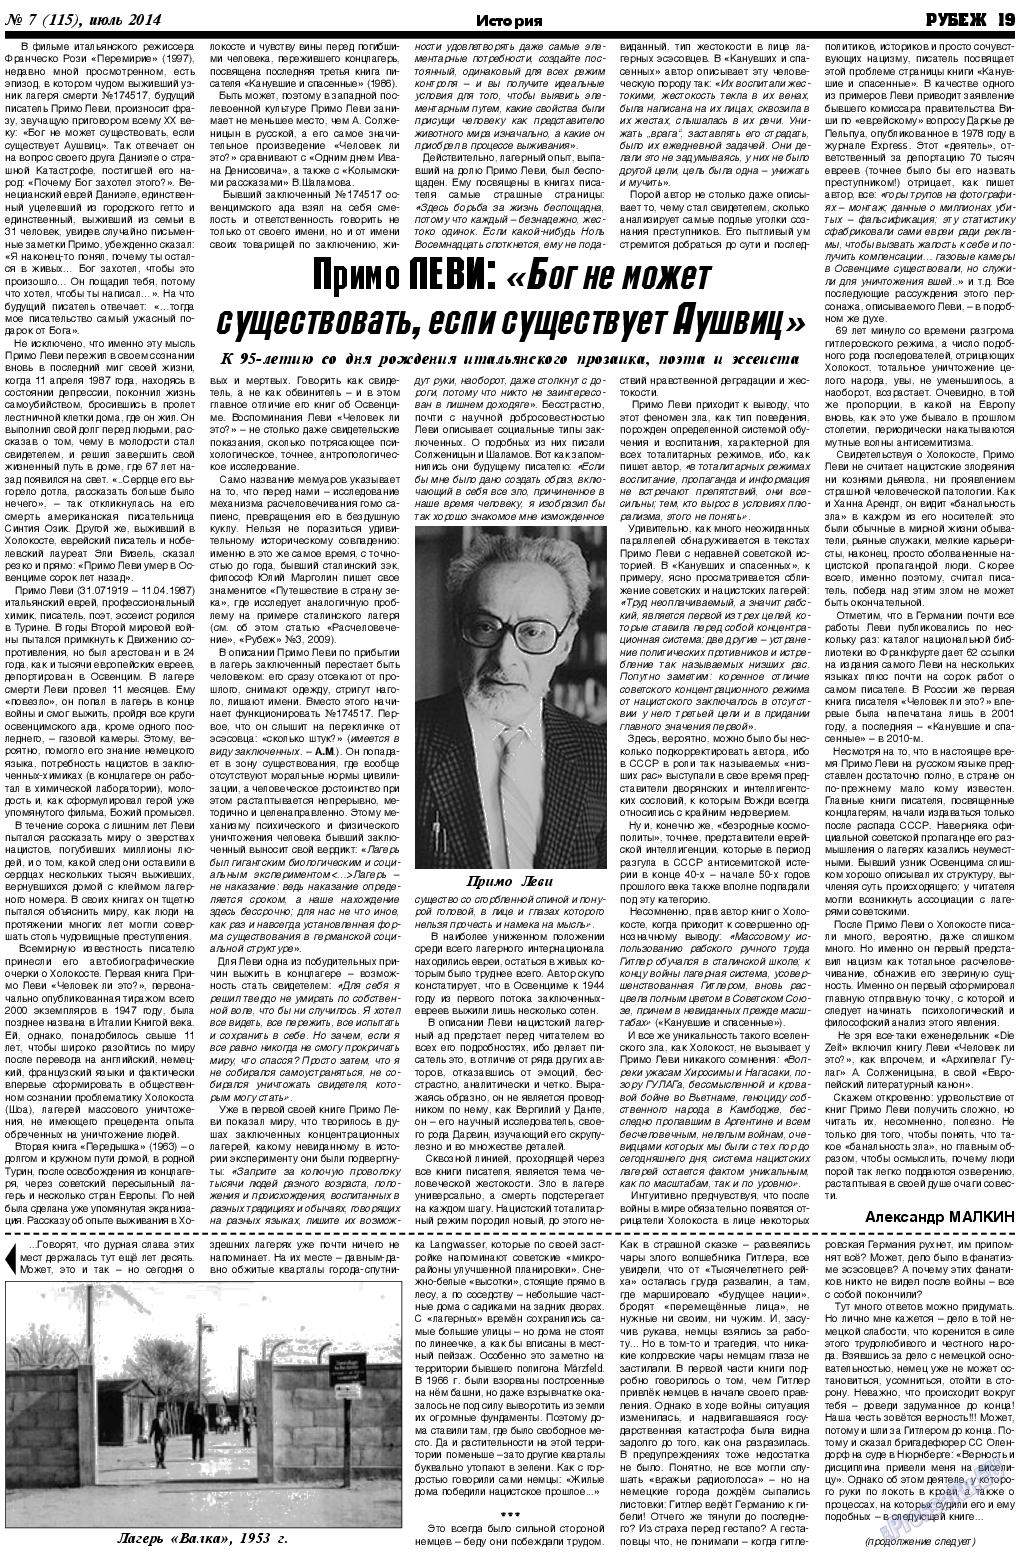 Рубеж, газета. 2014 №7 стр.19